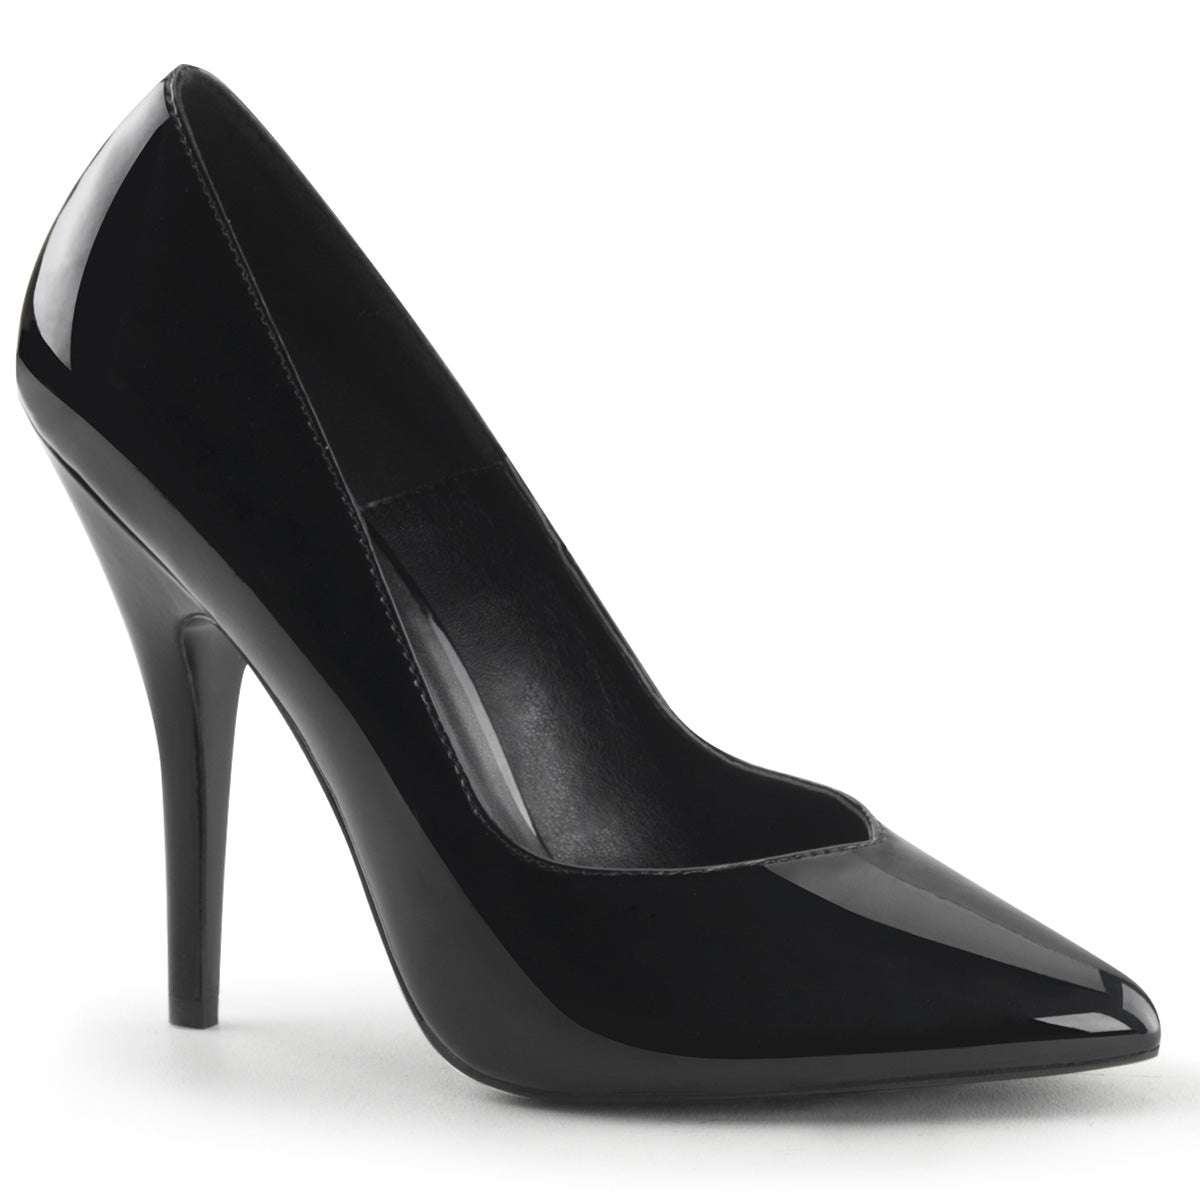 SEDUCE-420V Sexy Shoes 5" Heel Black Patent Fetish Footwear